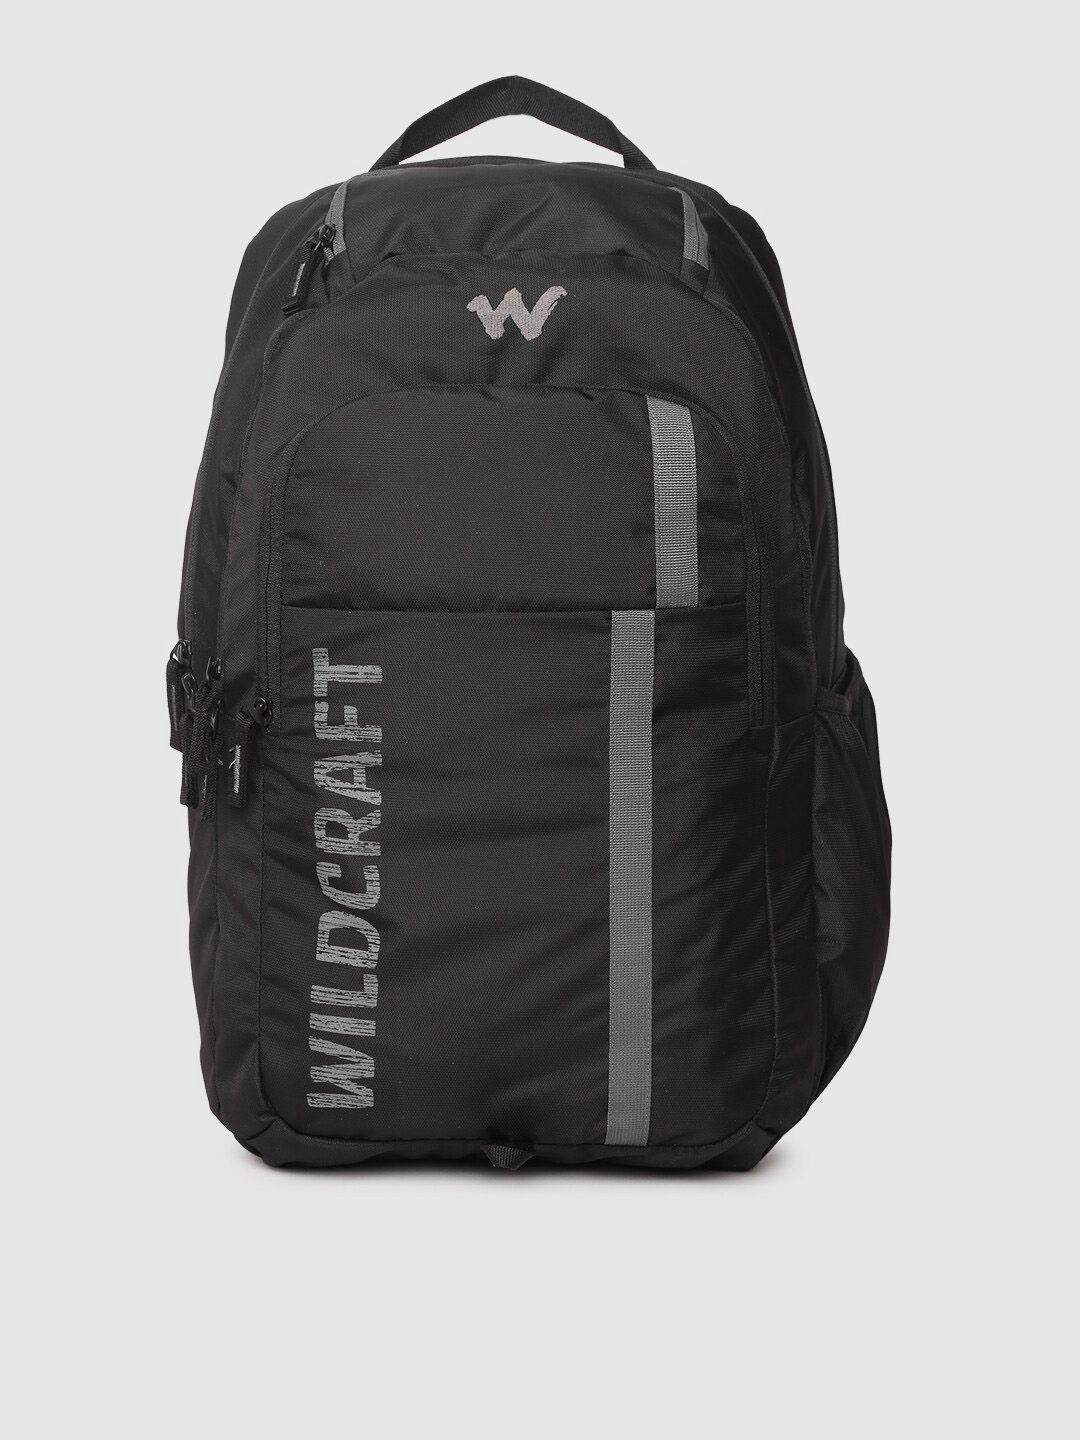 Wildcraft Unisex Black Lunar Laptop Backpack Price in India